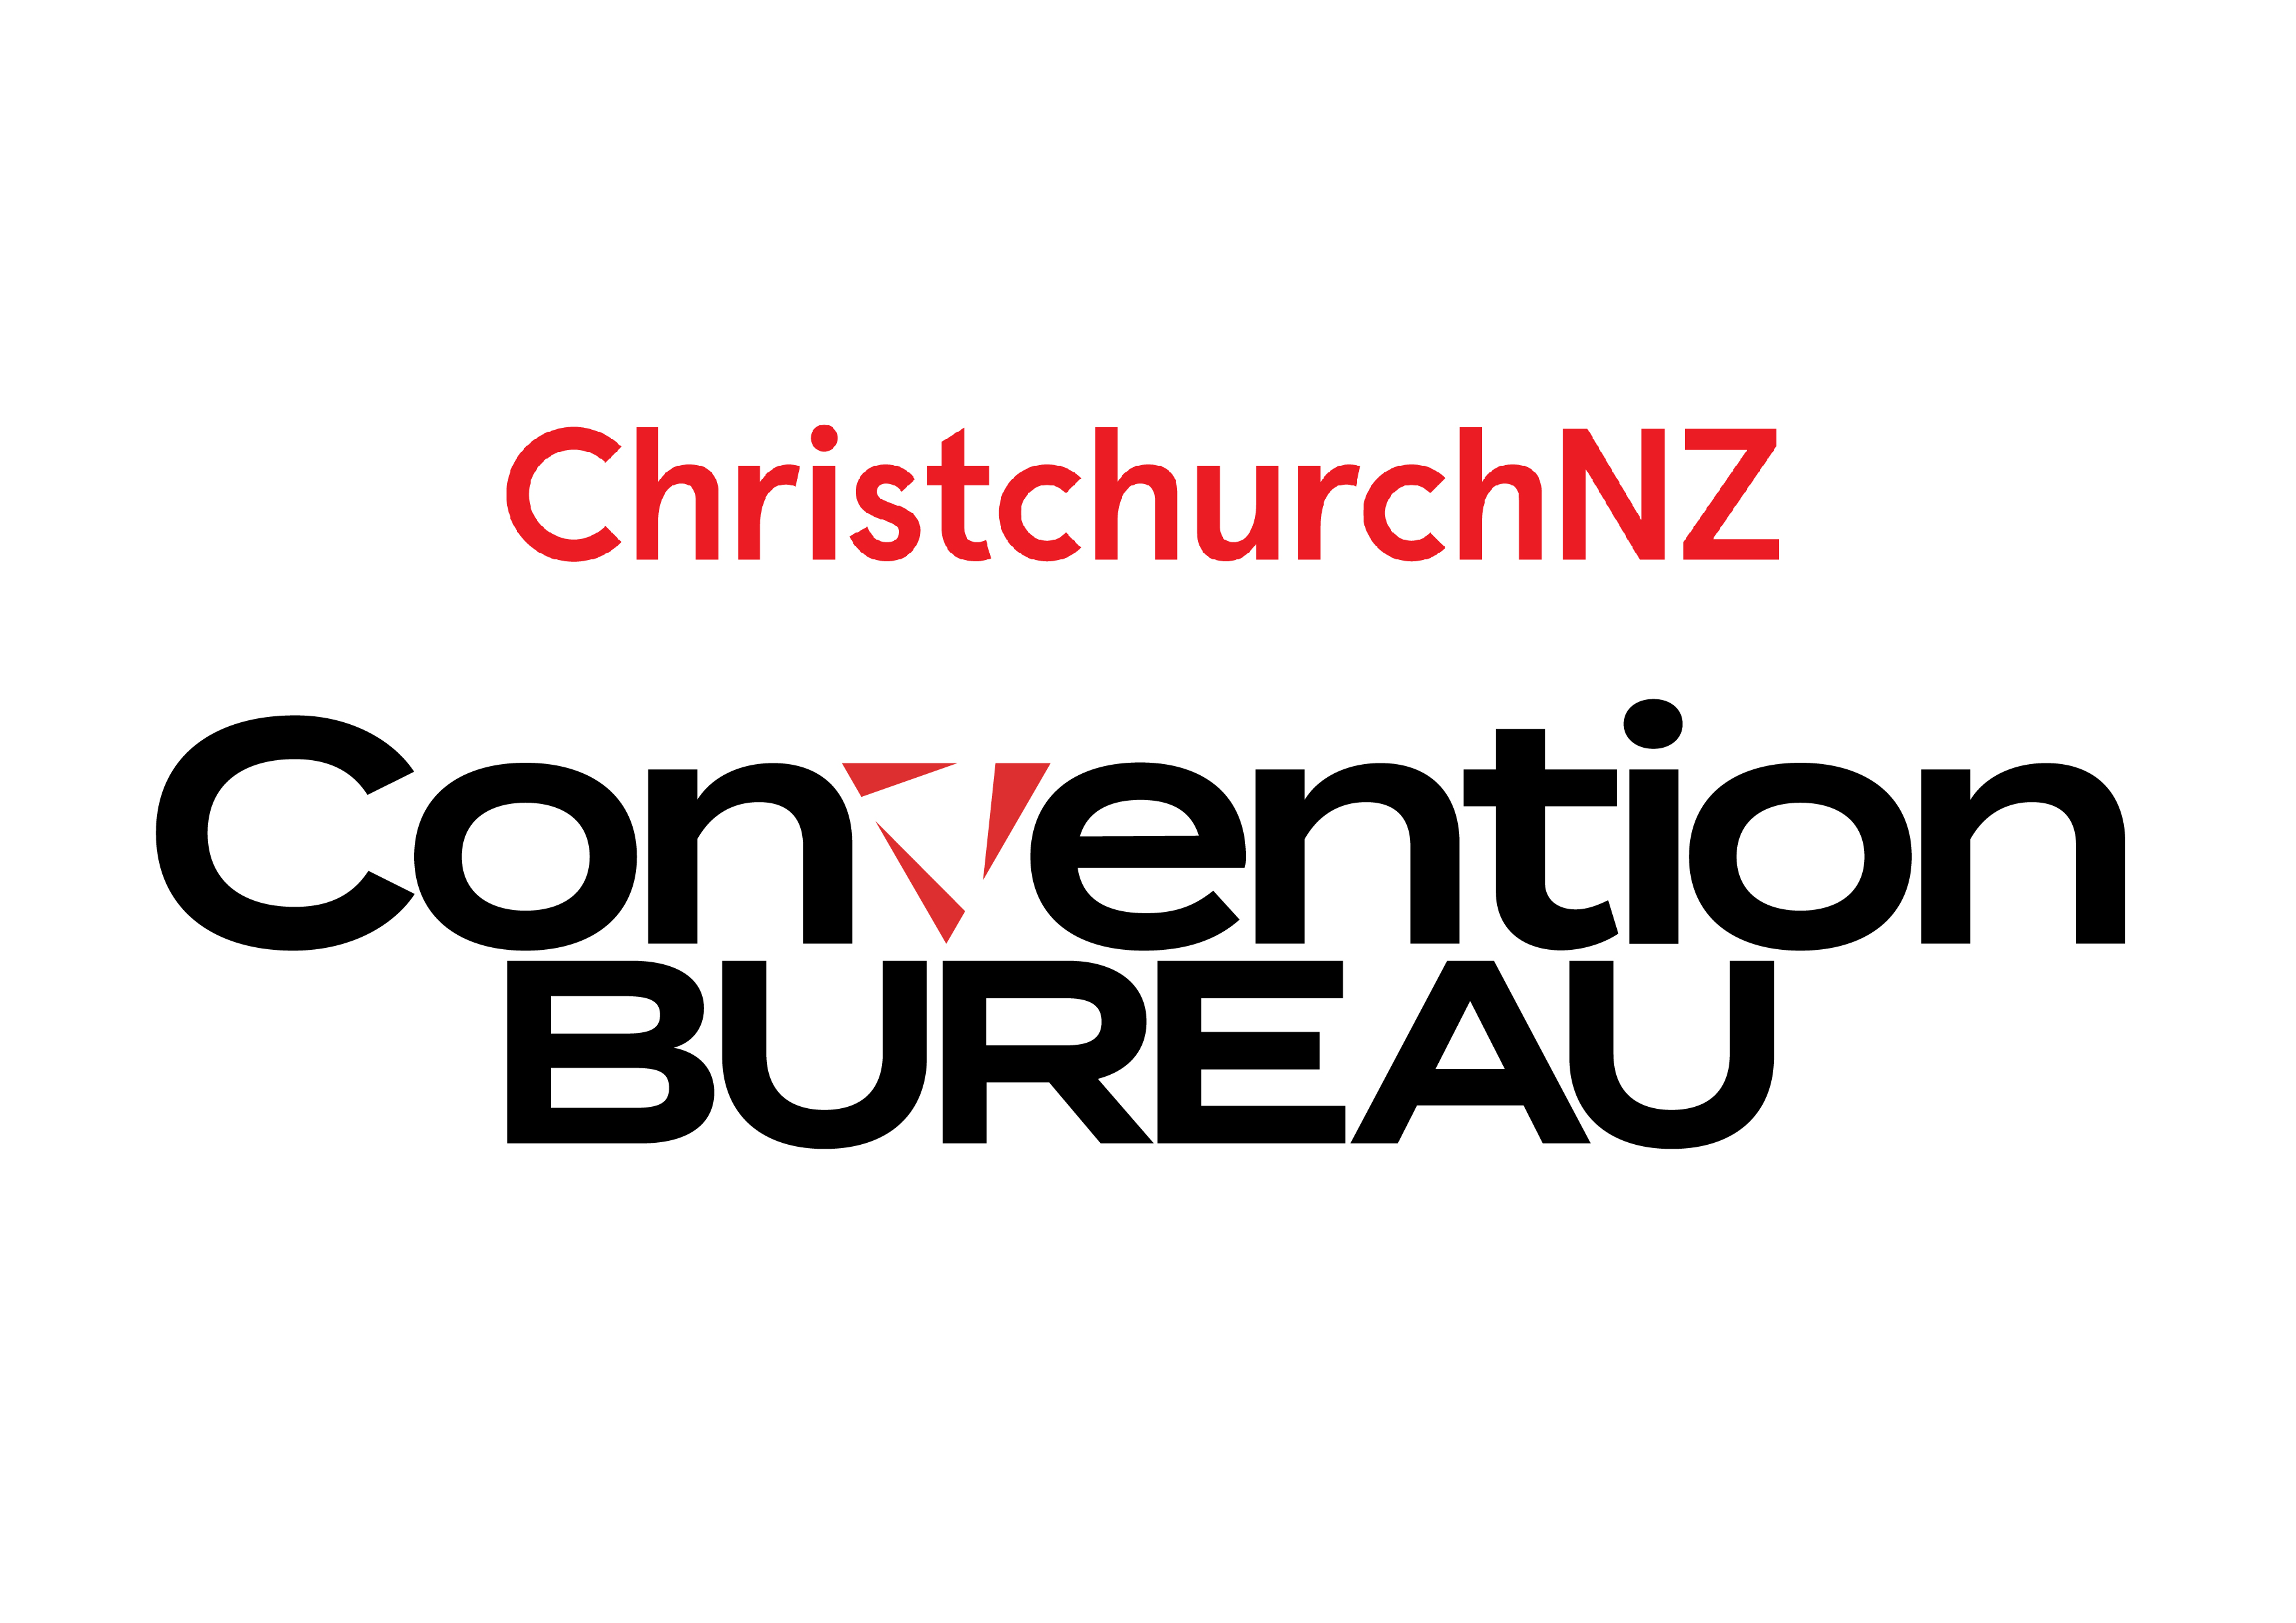 
ChristchurchNZ Convention Bureau